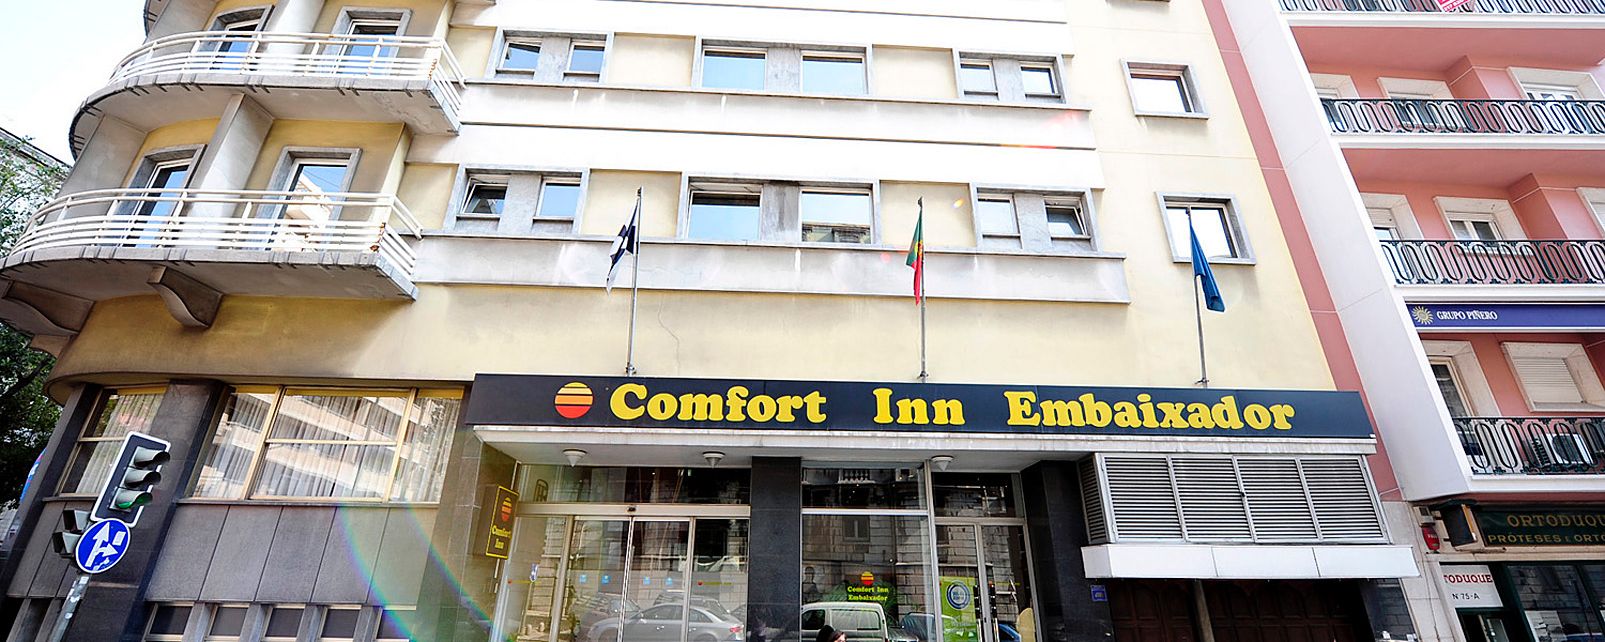 Hotel Comfort Inn Embaixador Hotel Lisbon